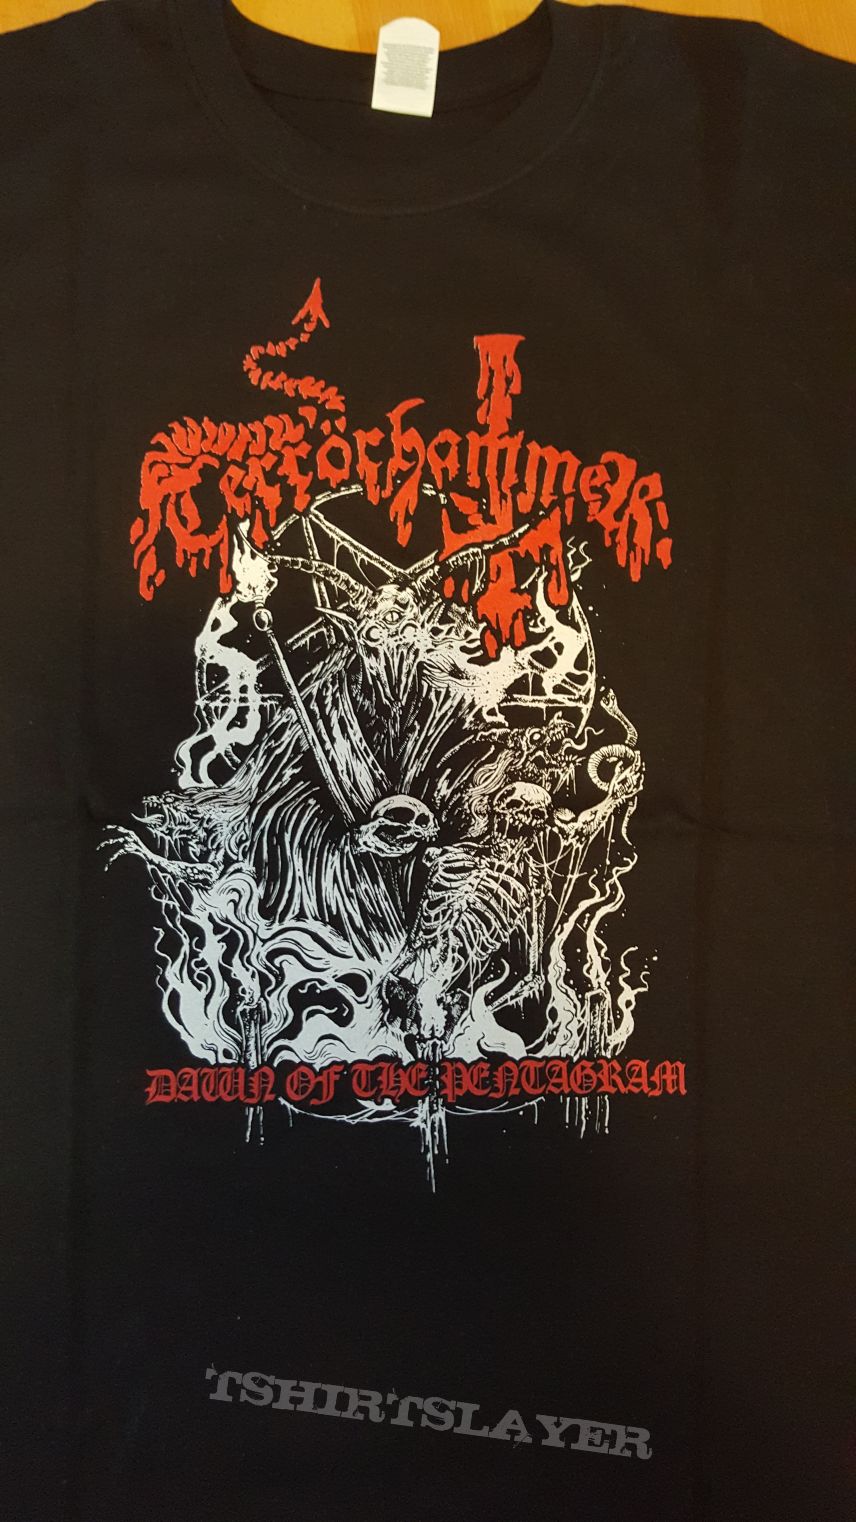 Terrörhammer Terrorhammer — Dawn of the Pentagram | TShirtSlayer TShirt ...